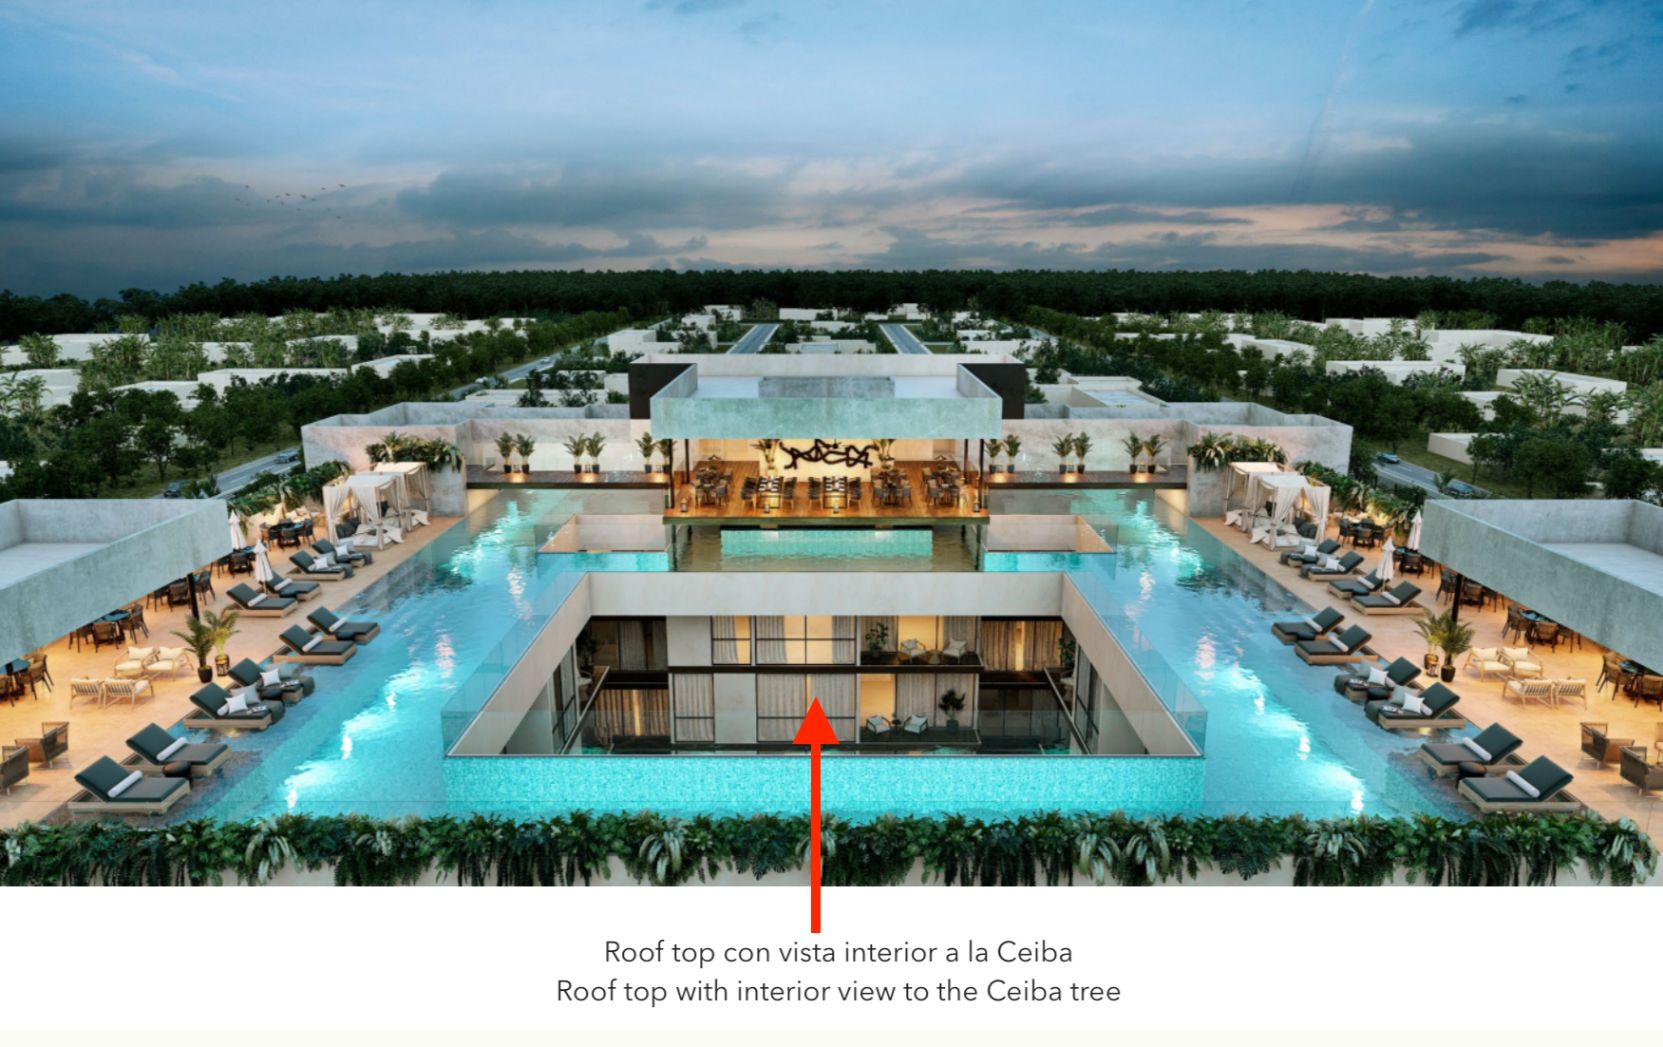 Golf course condominium, with clubhouse, cenotes, beach club, recreational parks, pre-construction for sale Playa del Carmen.